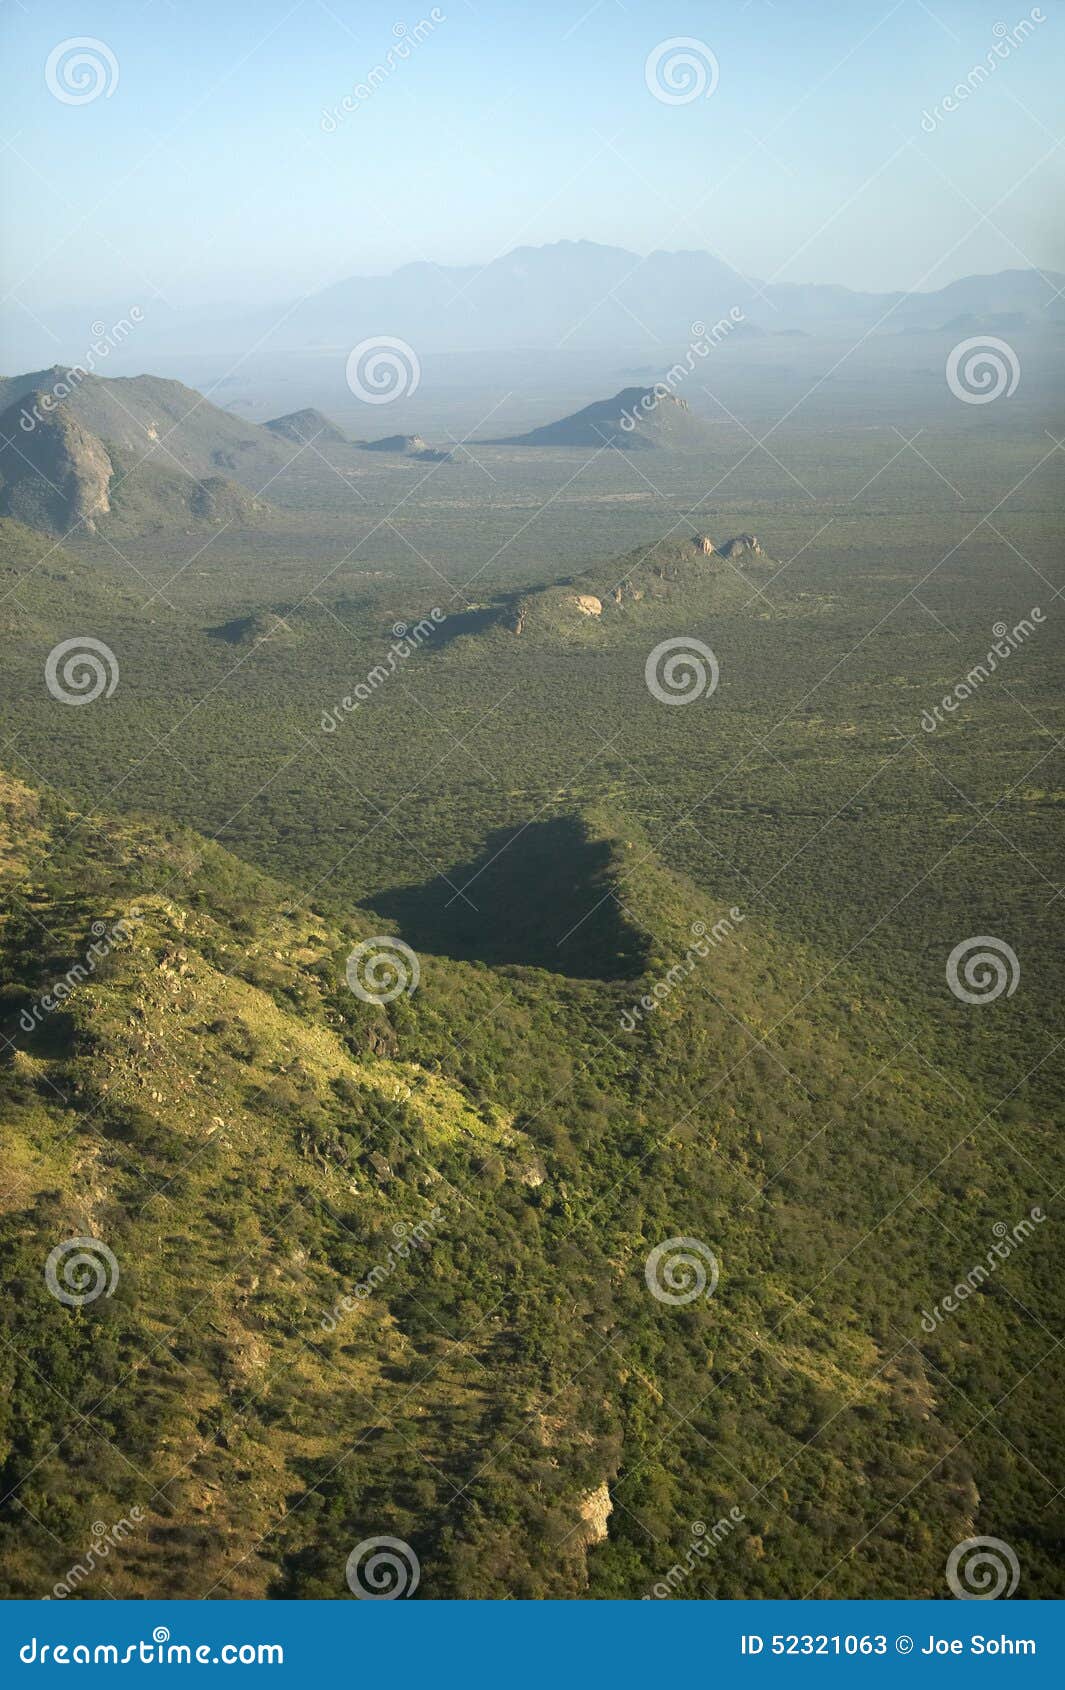 aerial photos of landforms at lewa conservancy in kenya, africa